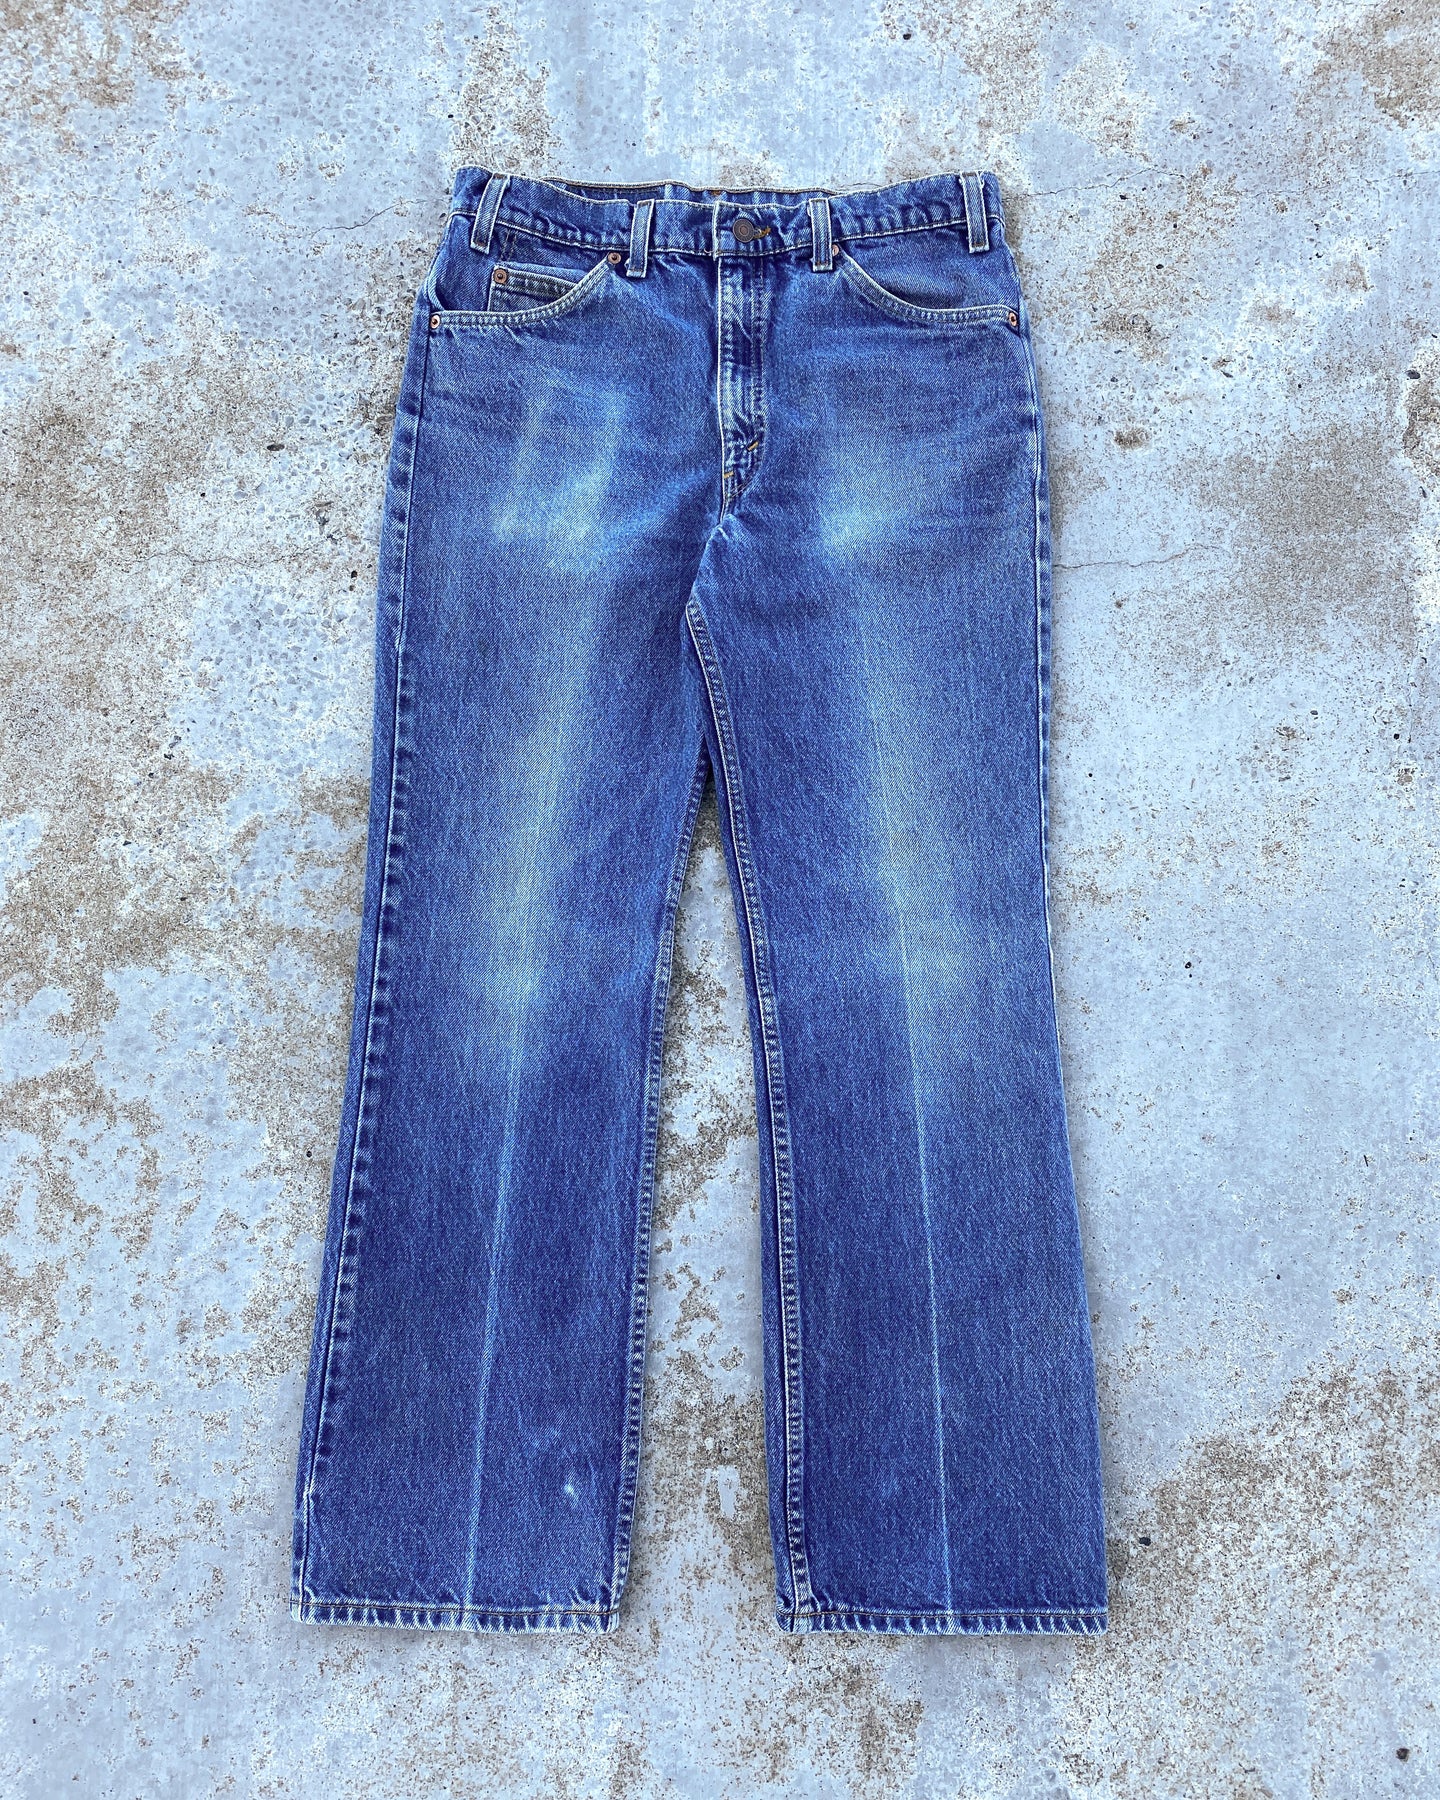 1990s Levi's 517 Orange Tab Indigo Wash Jeans - Size 32 x 29